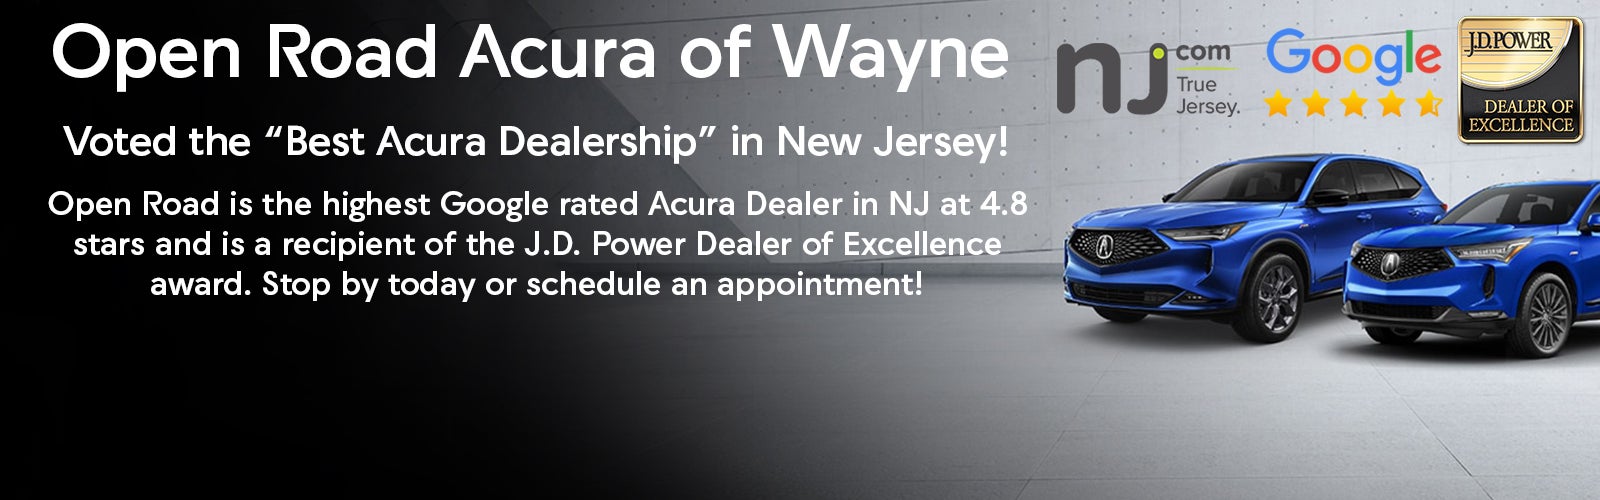 Best Acura Dealership in NJ